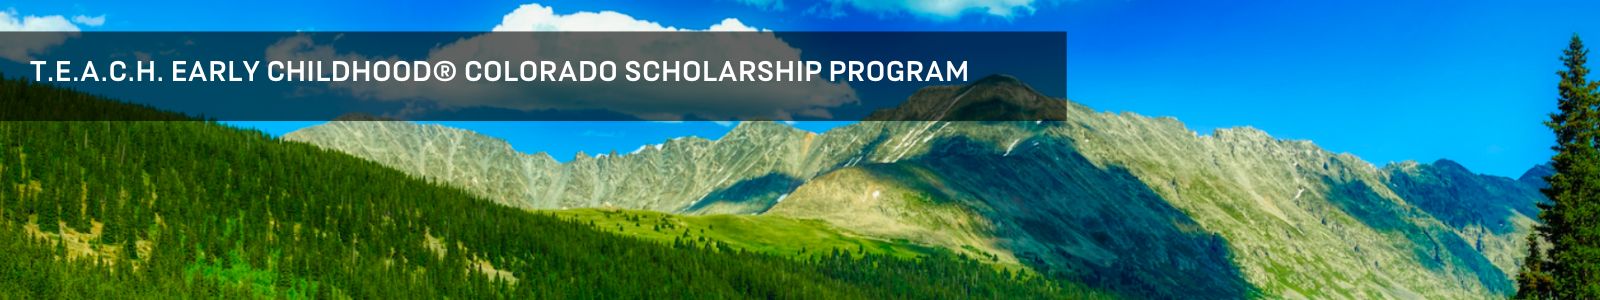 T.E.A.C.H. Early Childhood® Colorado Scholarship Program